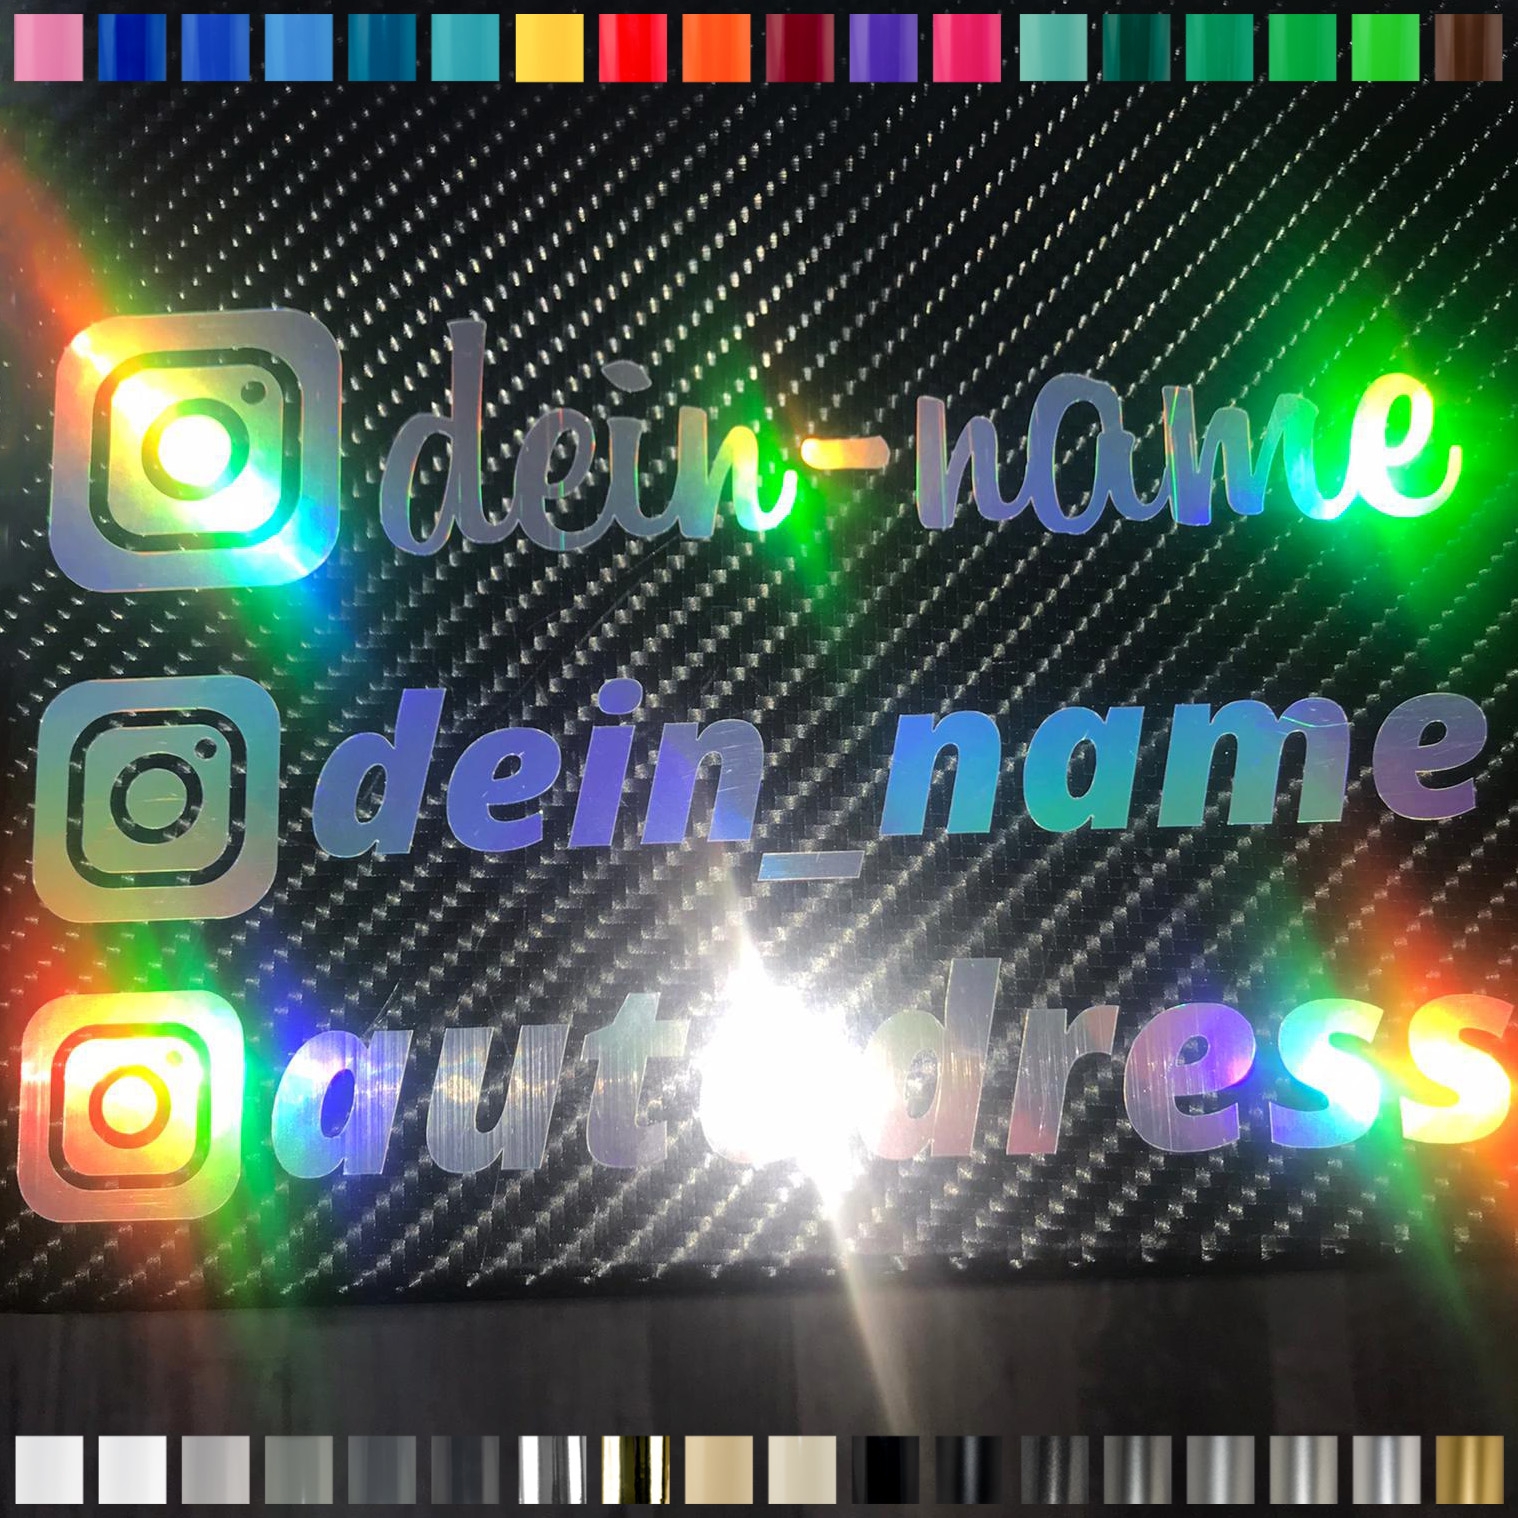 Instagram name sticker set/décor 1 pcs. 20x5cm in desired color